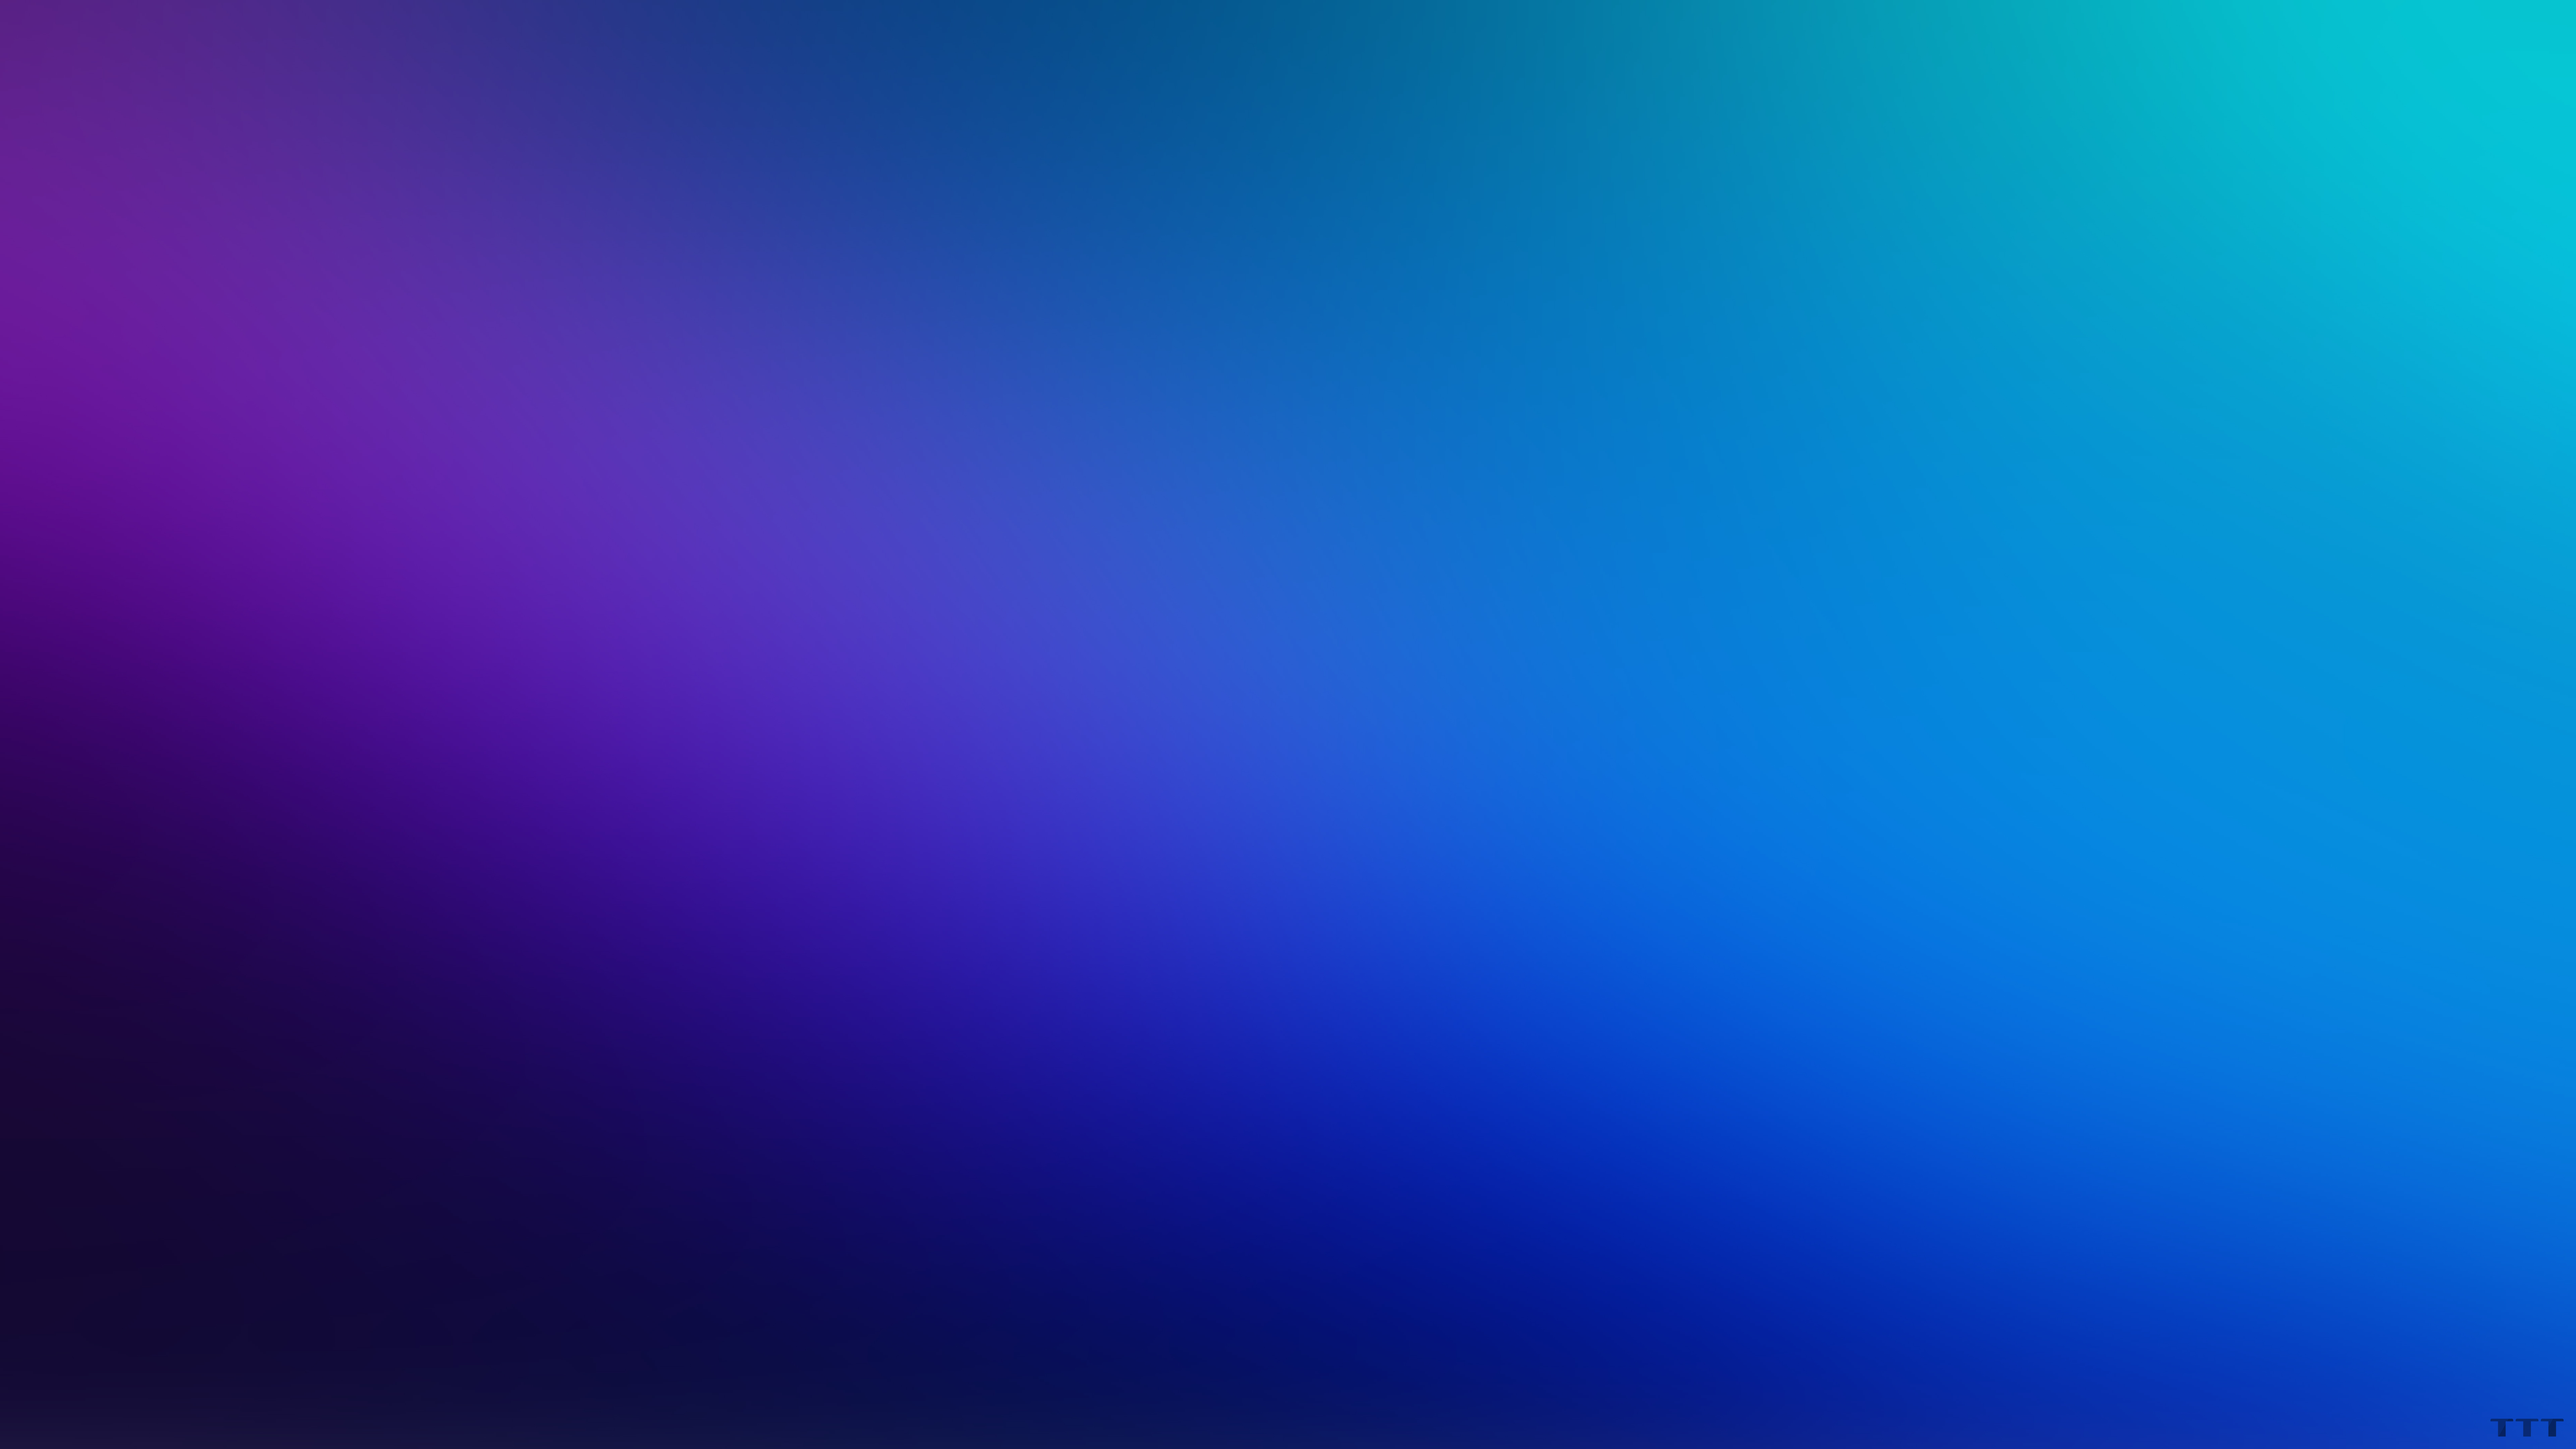 7680x4320 Green Blue Violet Gradient 8k 8k HD 4k Wallpapers, Images ...